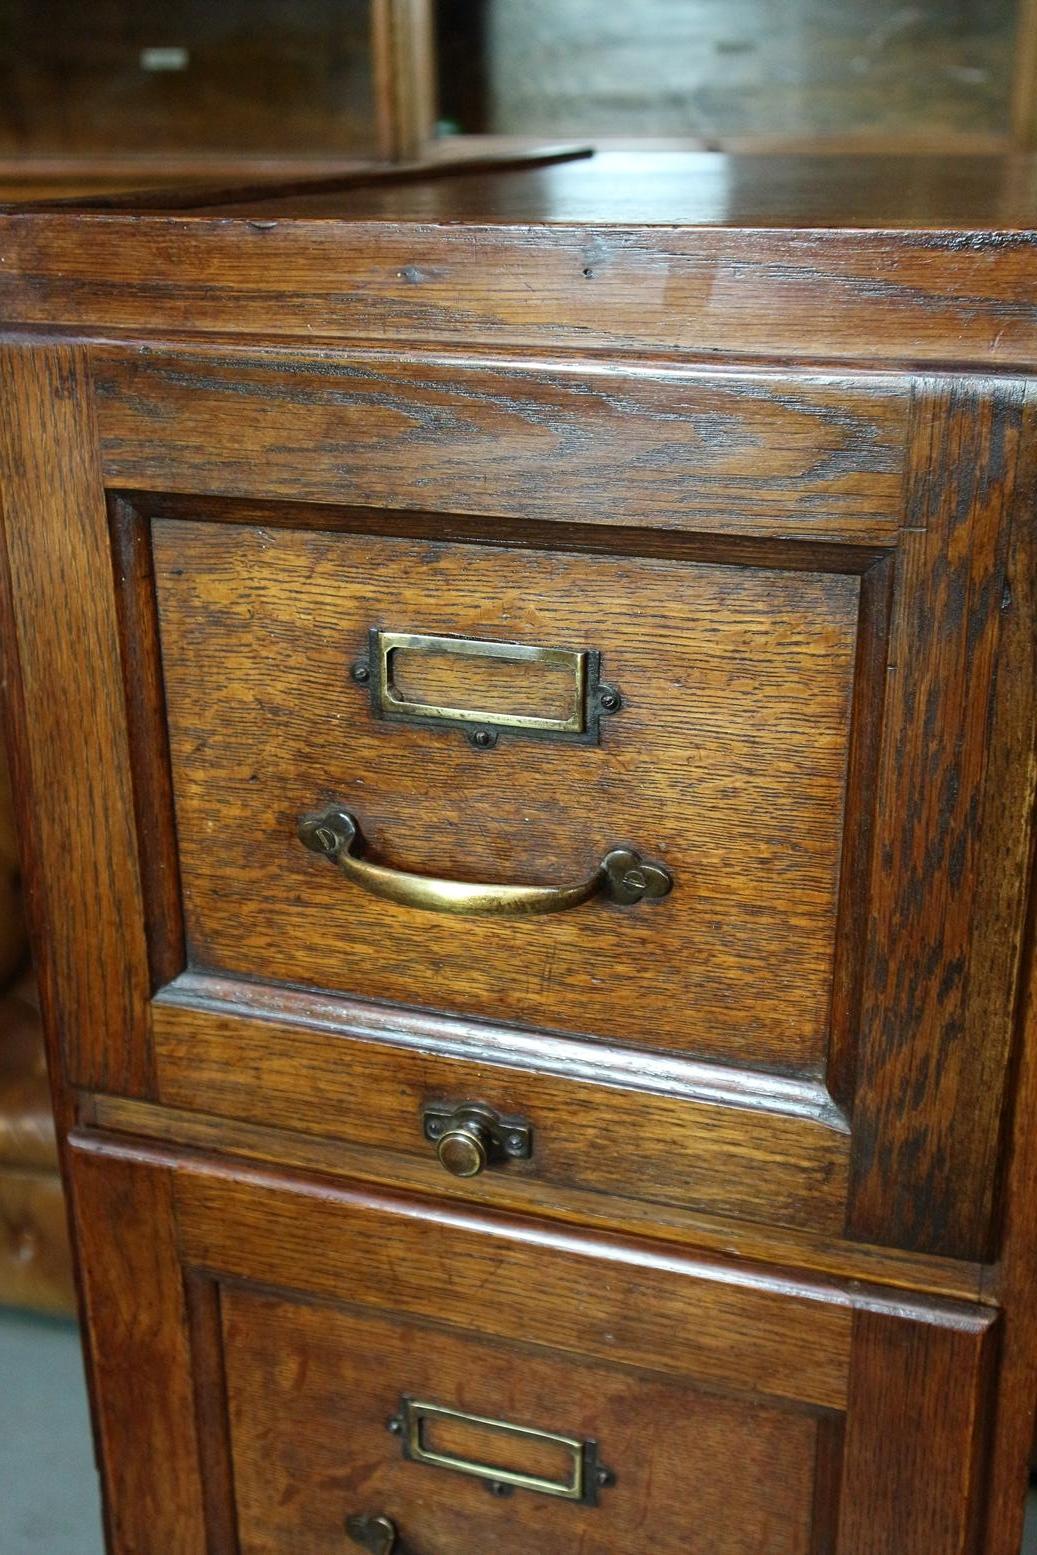 Oak filing cabinet in perfect condition. Nice warm color.
Origin: England
Period: circa 1930
Size: 38 cm x 66 cm x H 130 cm.